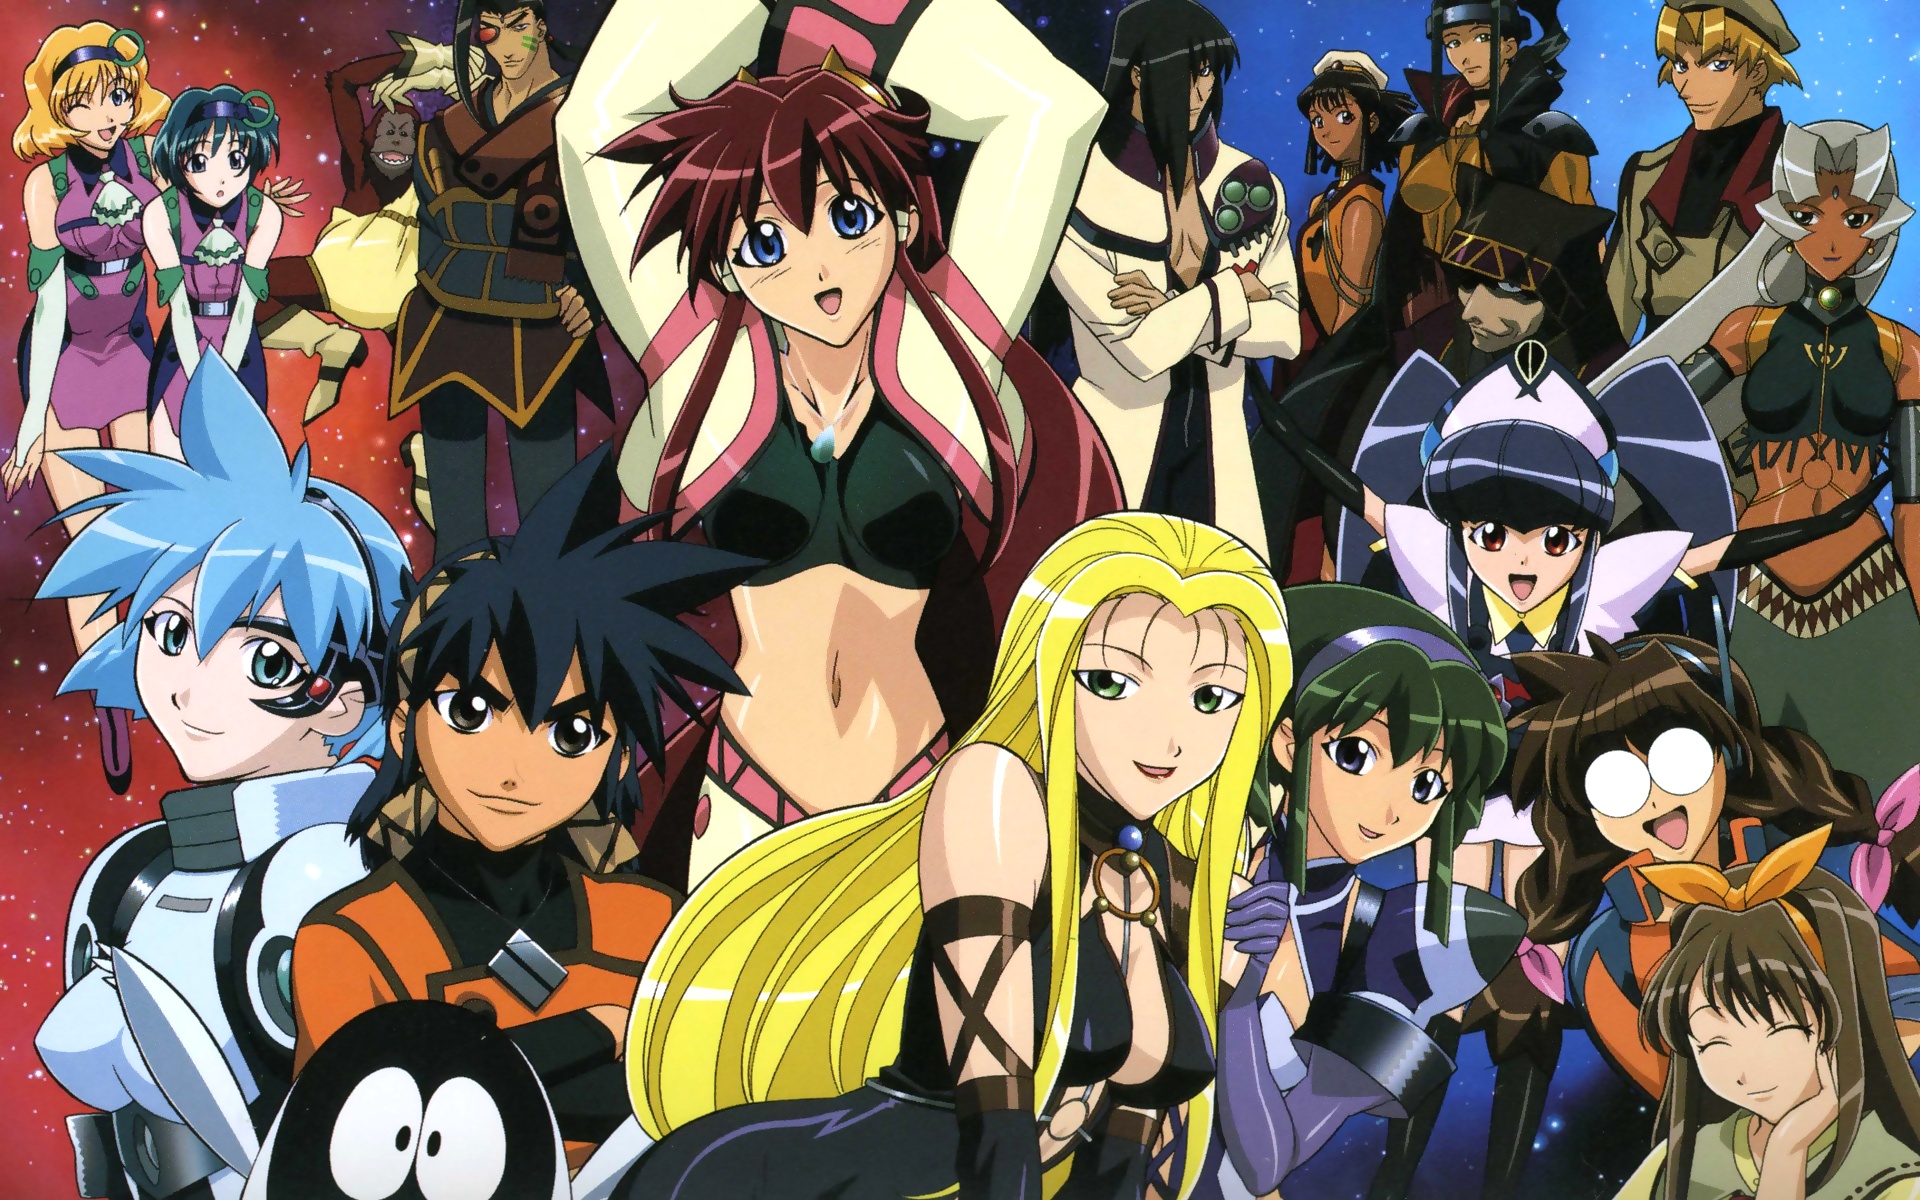 Anime Vandread HD Wallpaper | Background Image